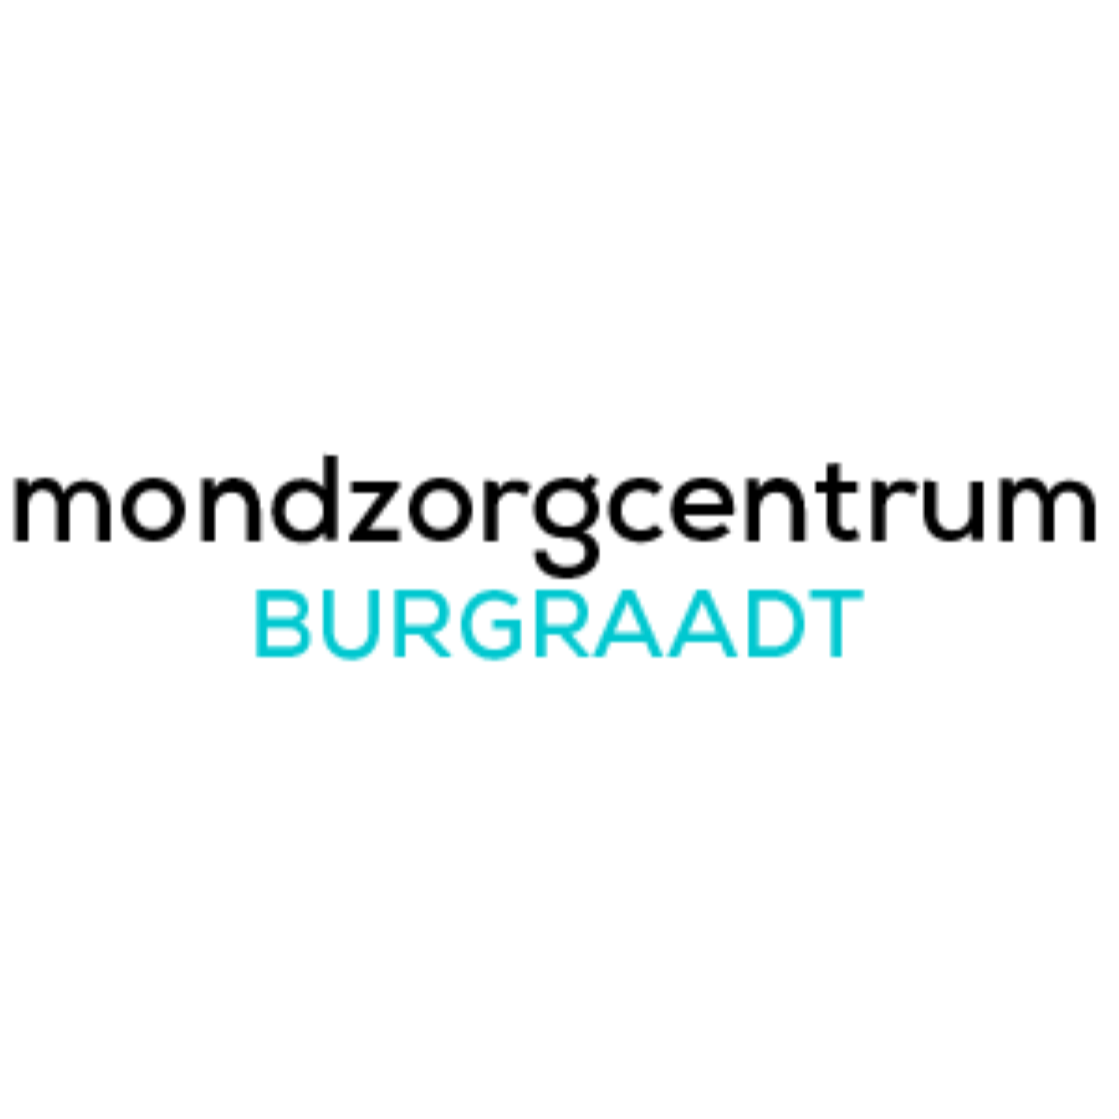 Mondzorgcentrum Burgraadt Logo